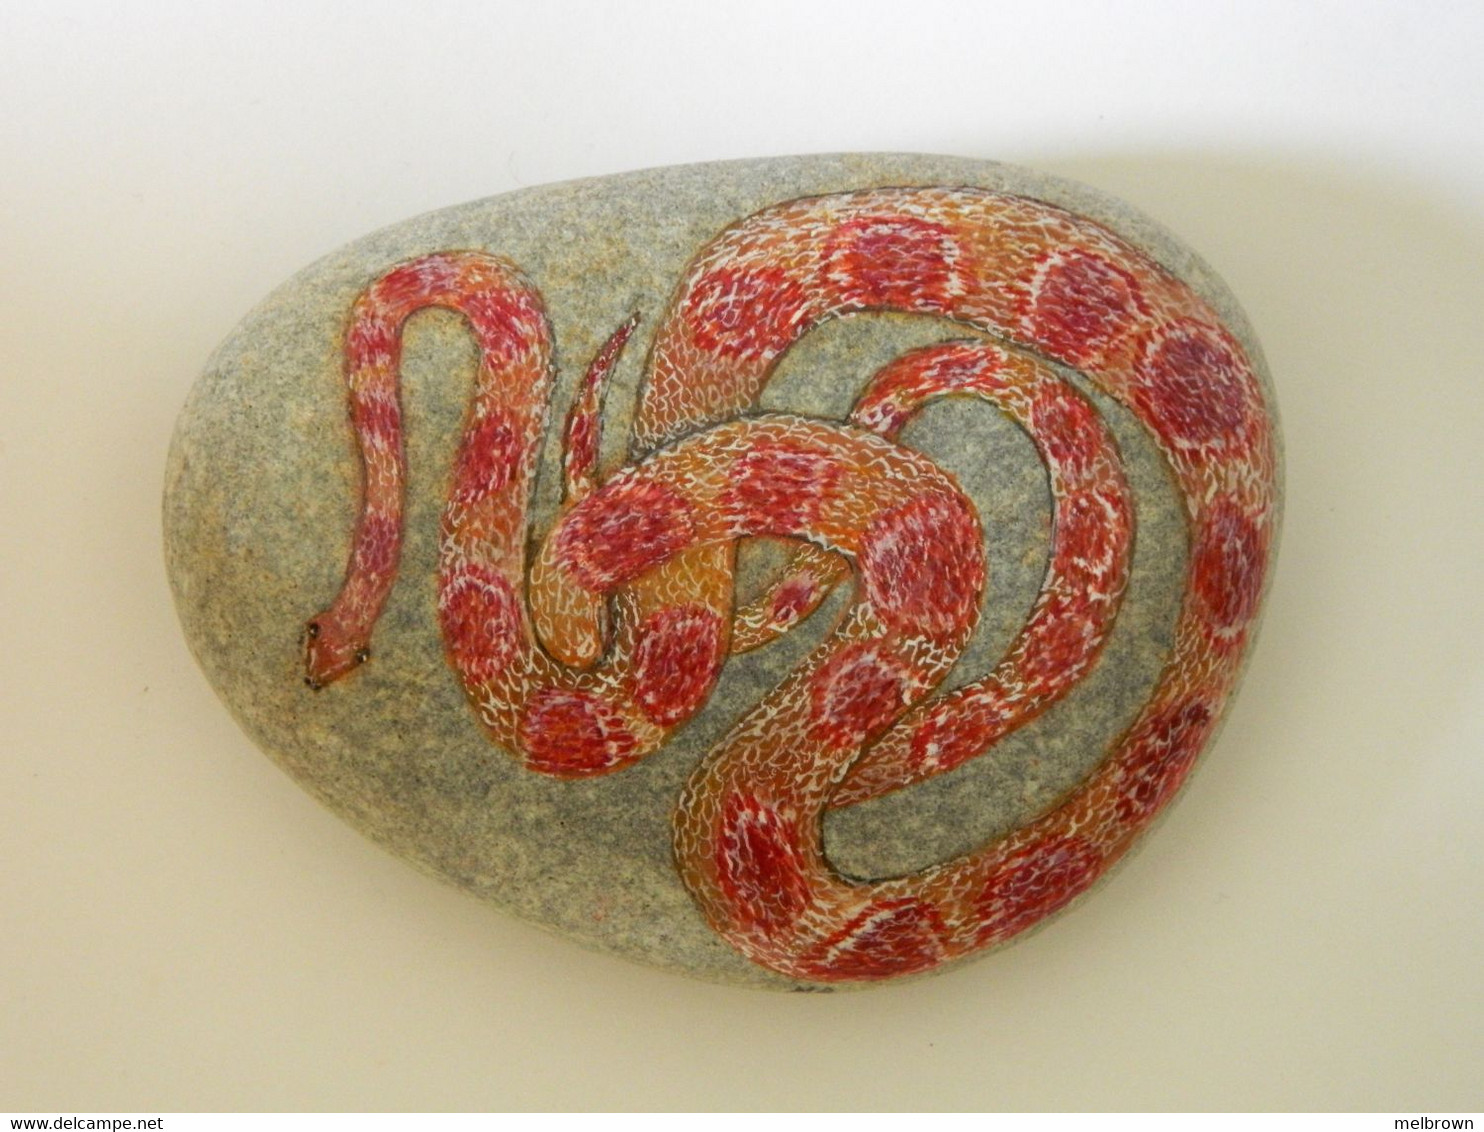 CORN SNAKE Hand Painted On A Beach Stone Paperweight Decoration - Briefbeschwerer